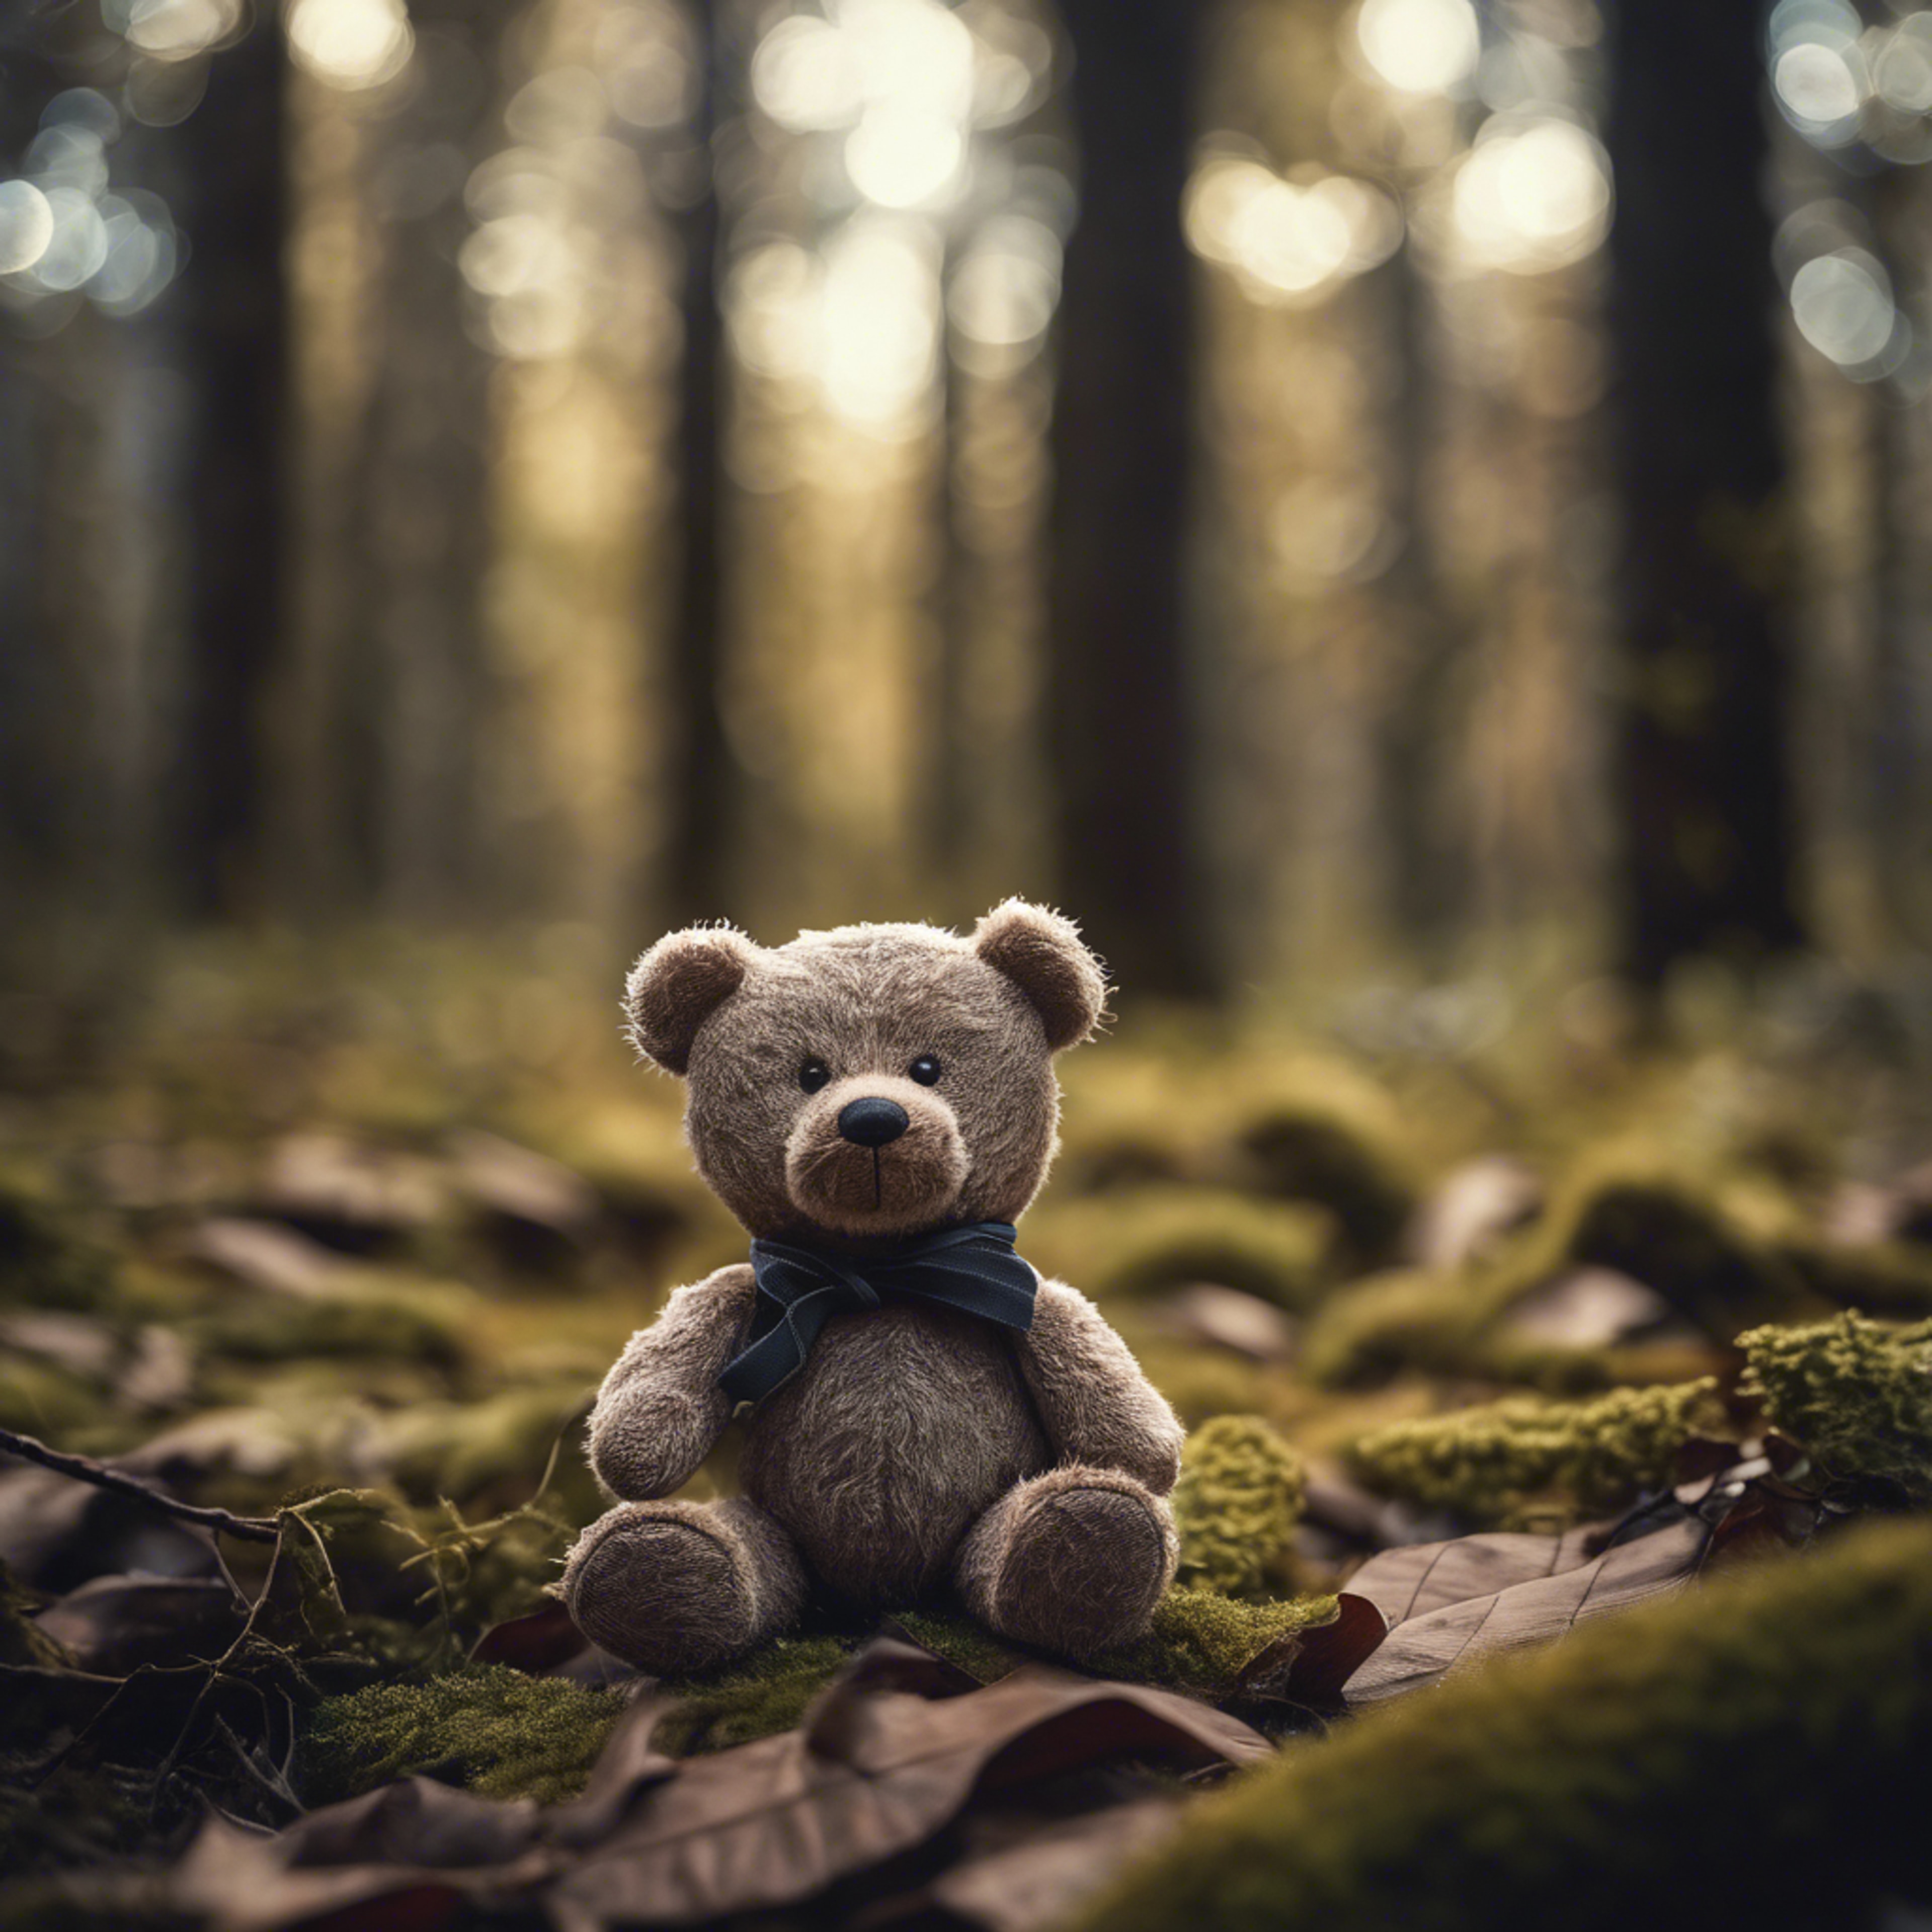 A teddy bear lost and alone in a dark forest. Hintergrund[4d225efade314682baea]